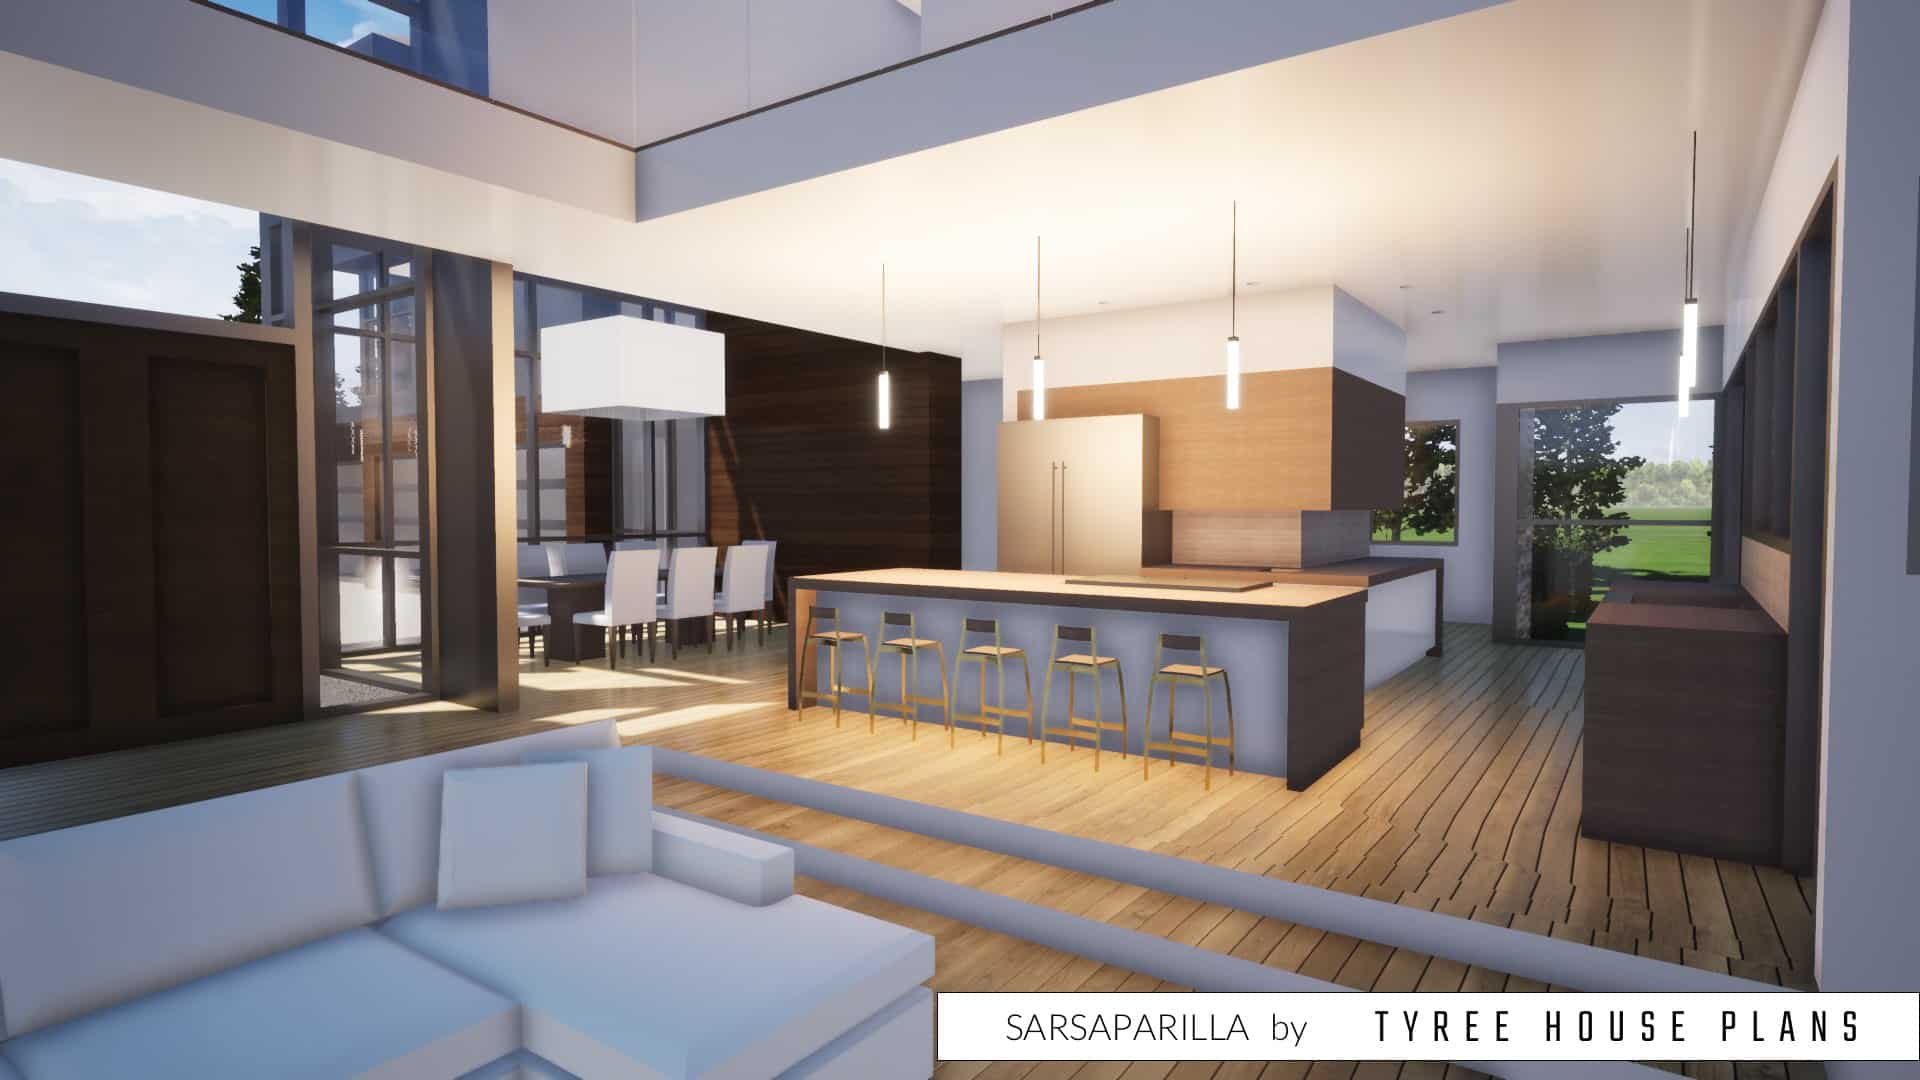 Kitchen with island. Sarsaparilla by Tyree House Plans.